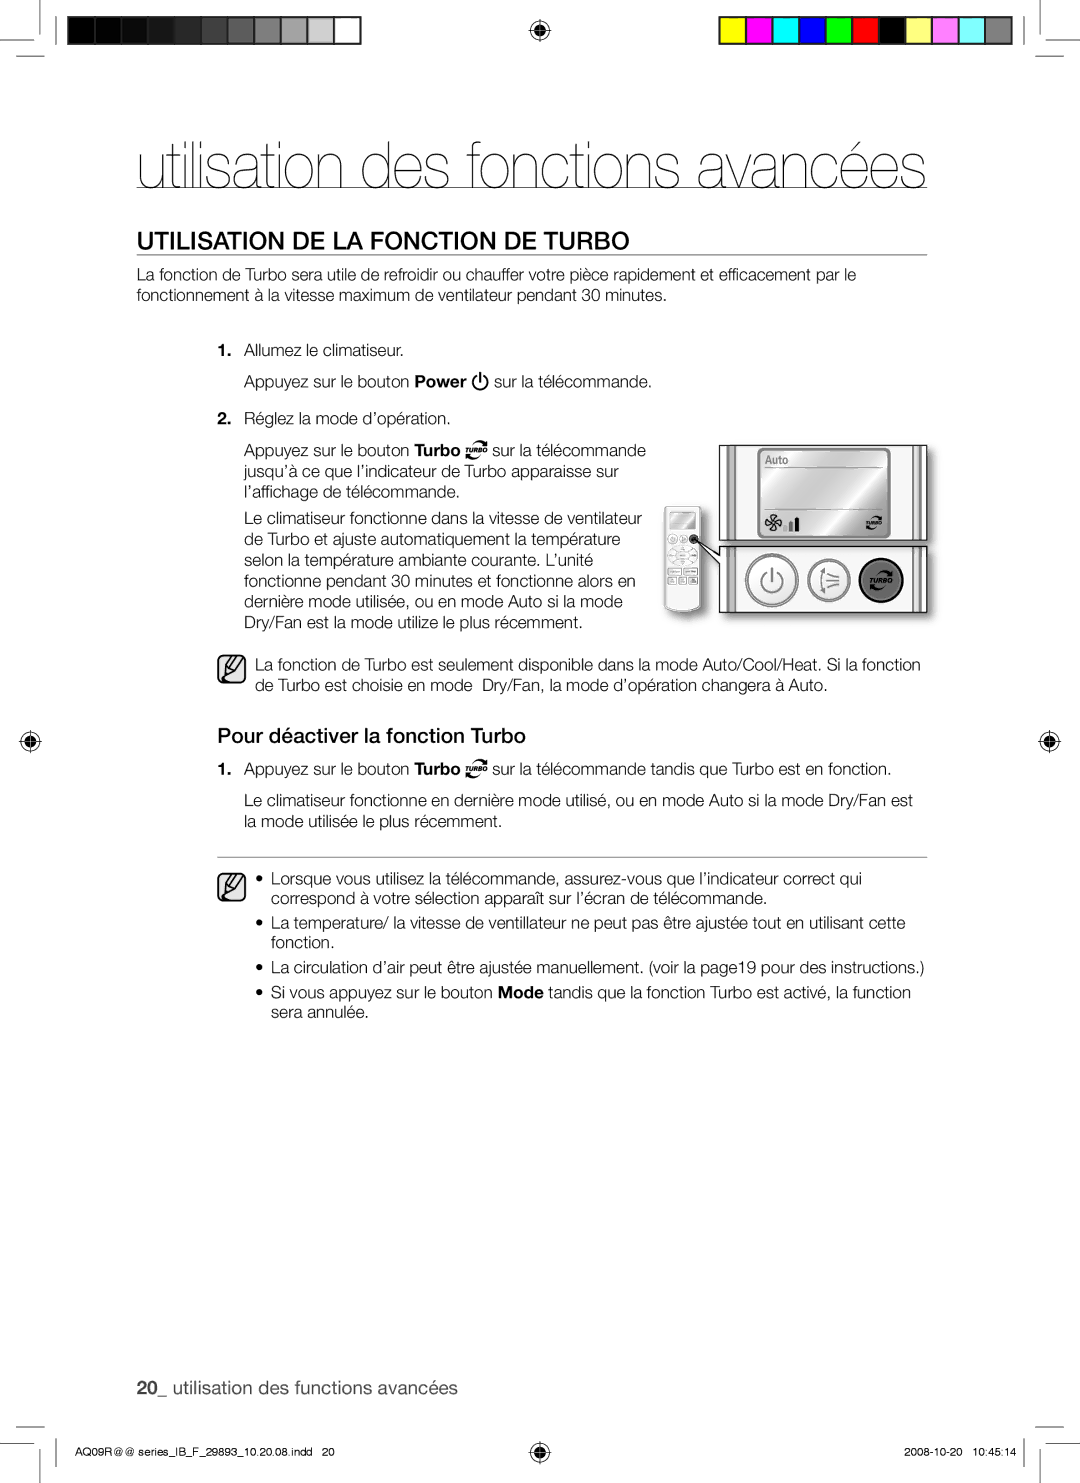 Samsung AQ09RGAX, AQ12UGAX, AQ18UGAN, AQ12UGBX manual Utilisation DE LA Fonction DE Turbo, Pour déactiver la fonction Turbo 